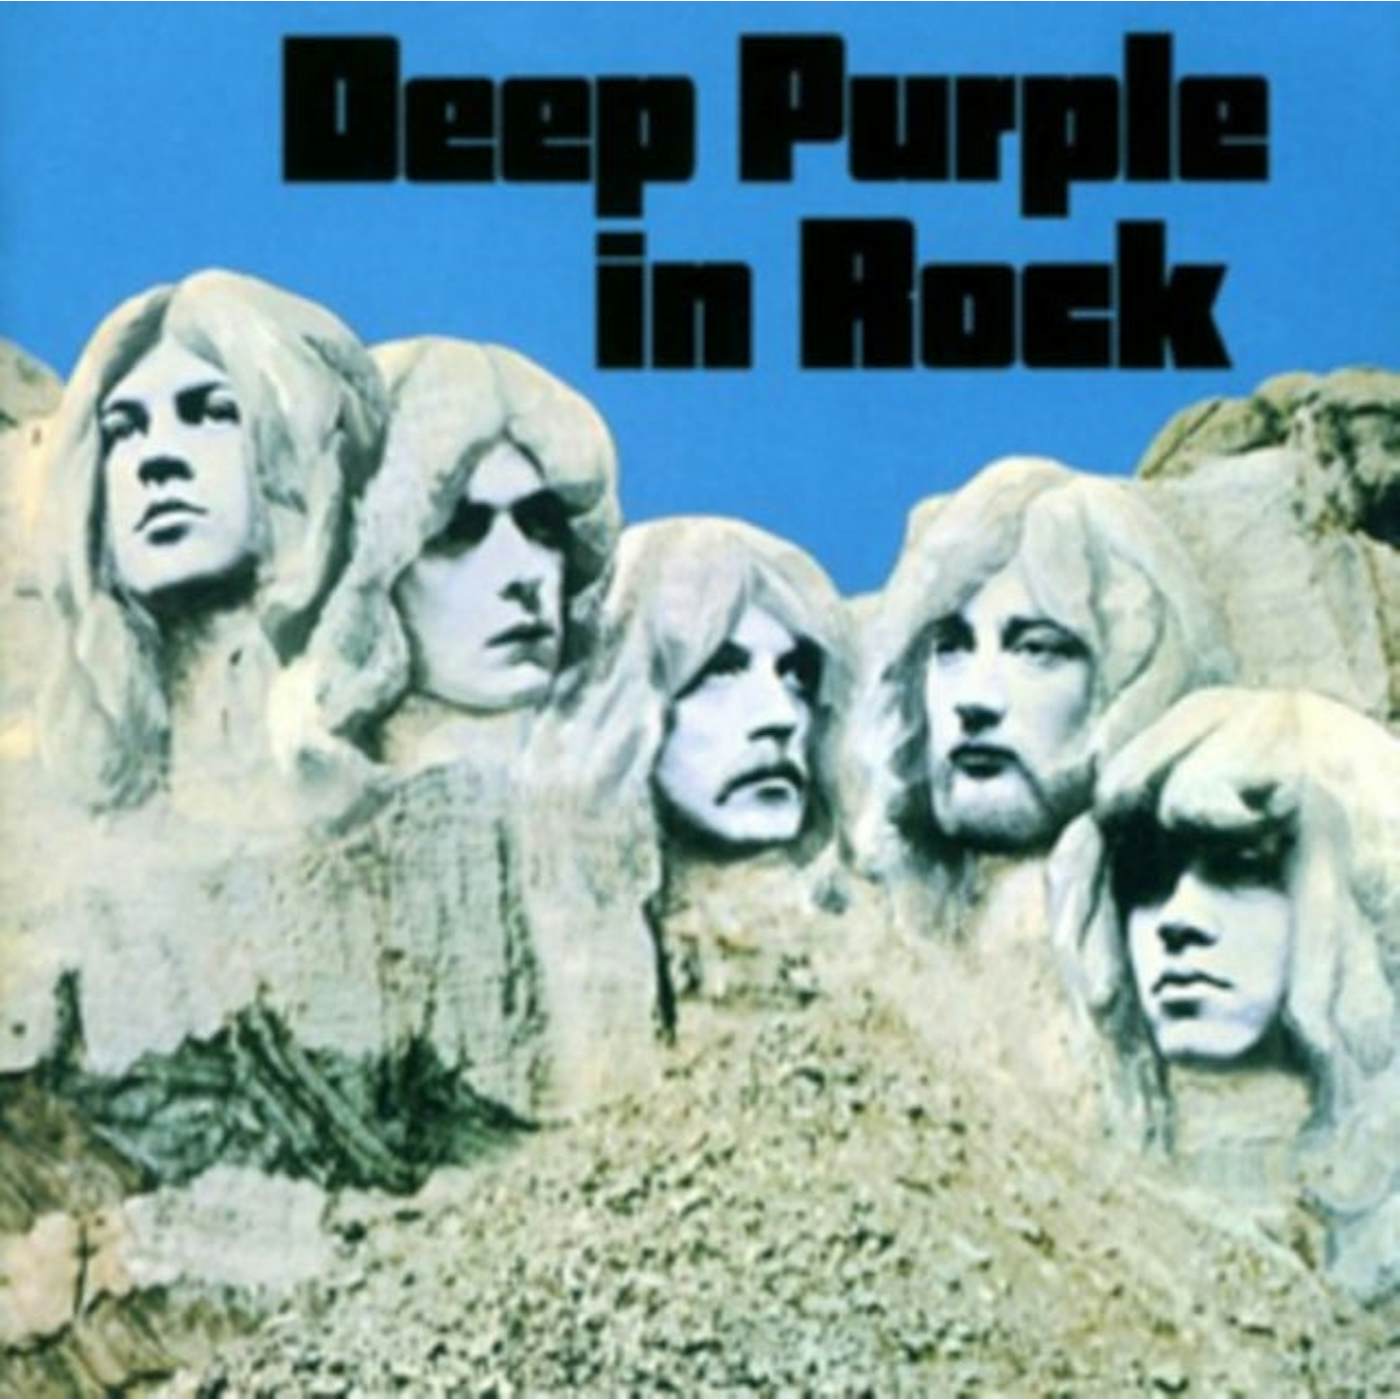 Deep Purple LP Vinyl Record - In Rock